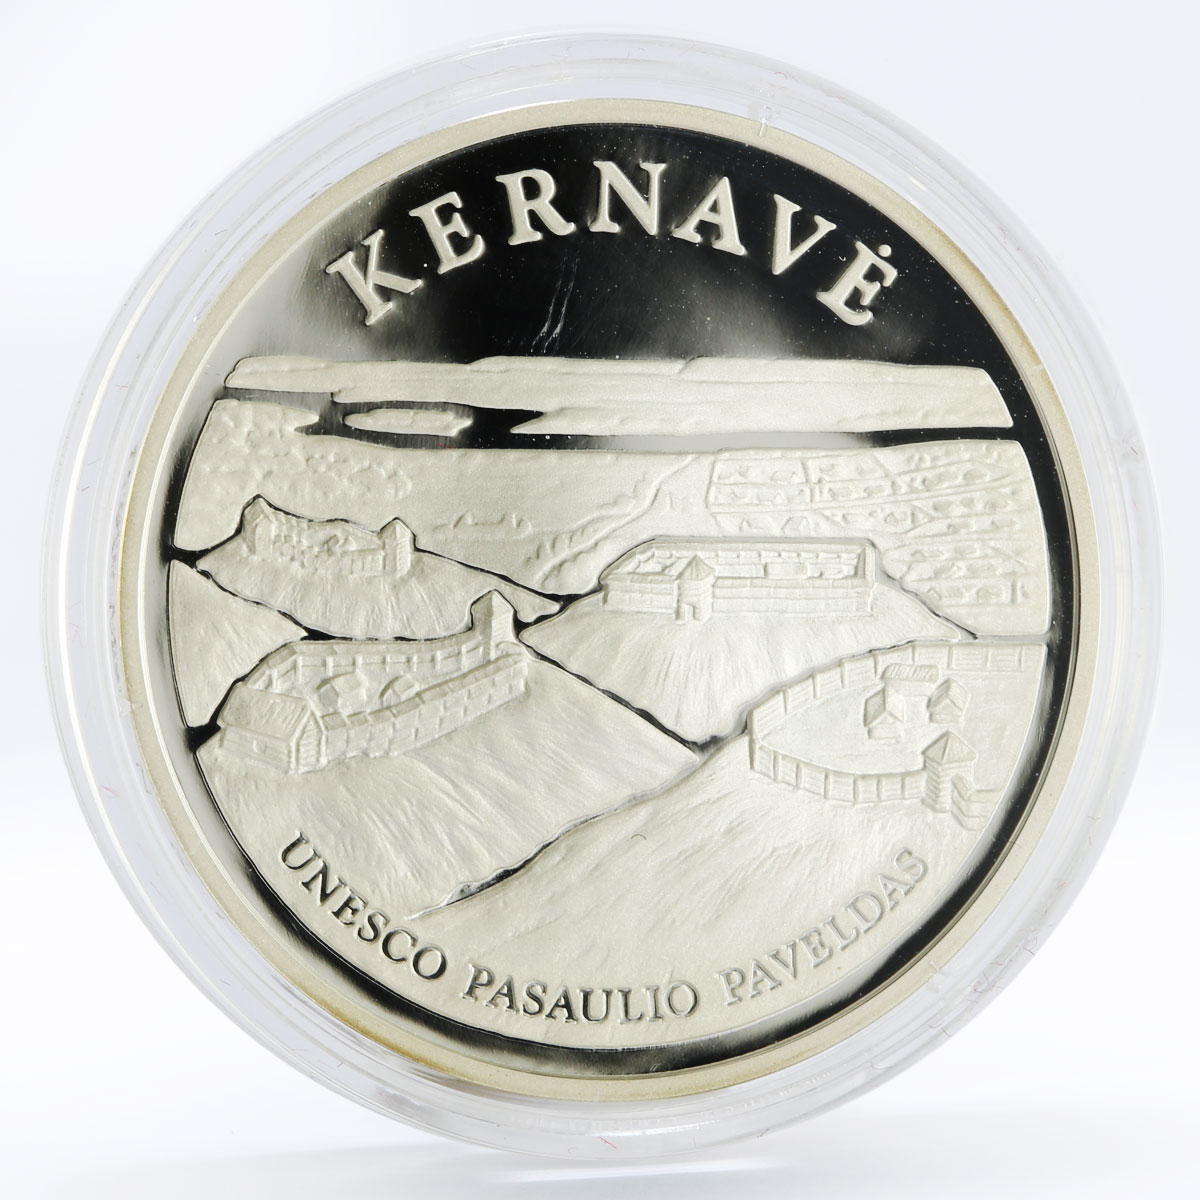 Lithuania 50 litu Architecture Castles Kernave proof silver coin 2005